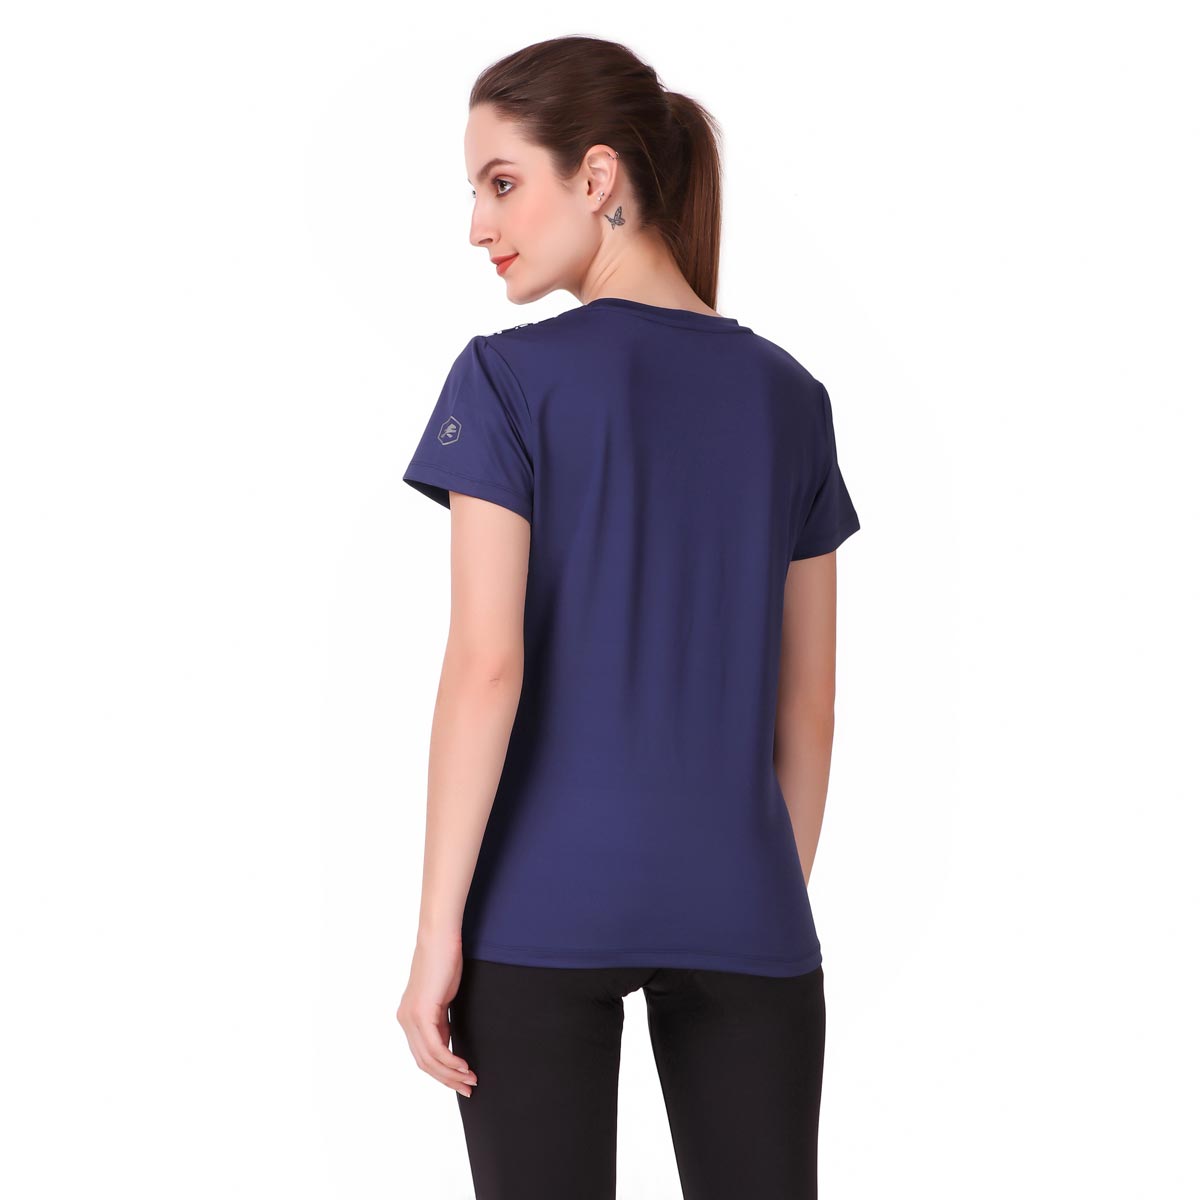 Performance Raglan Print Tshirt For Women (Blue Blood)